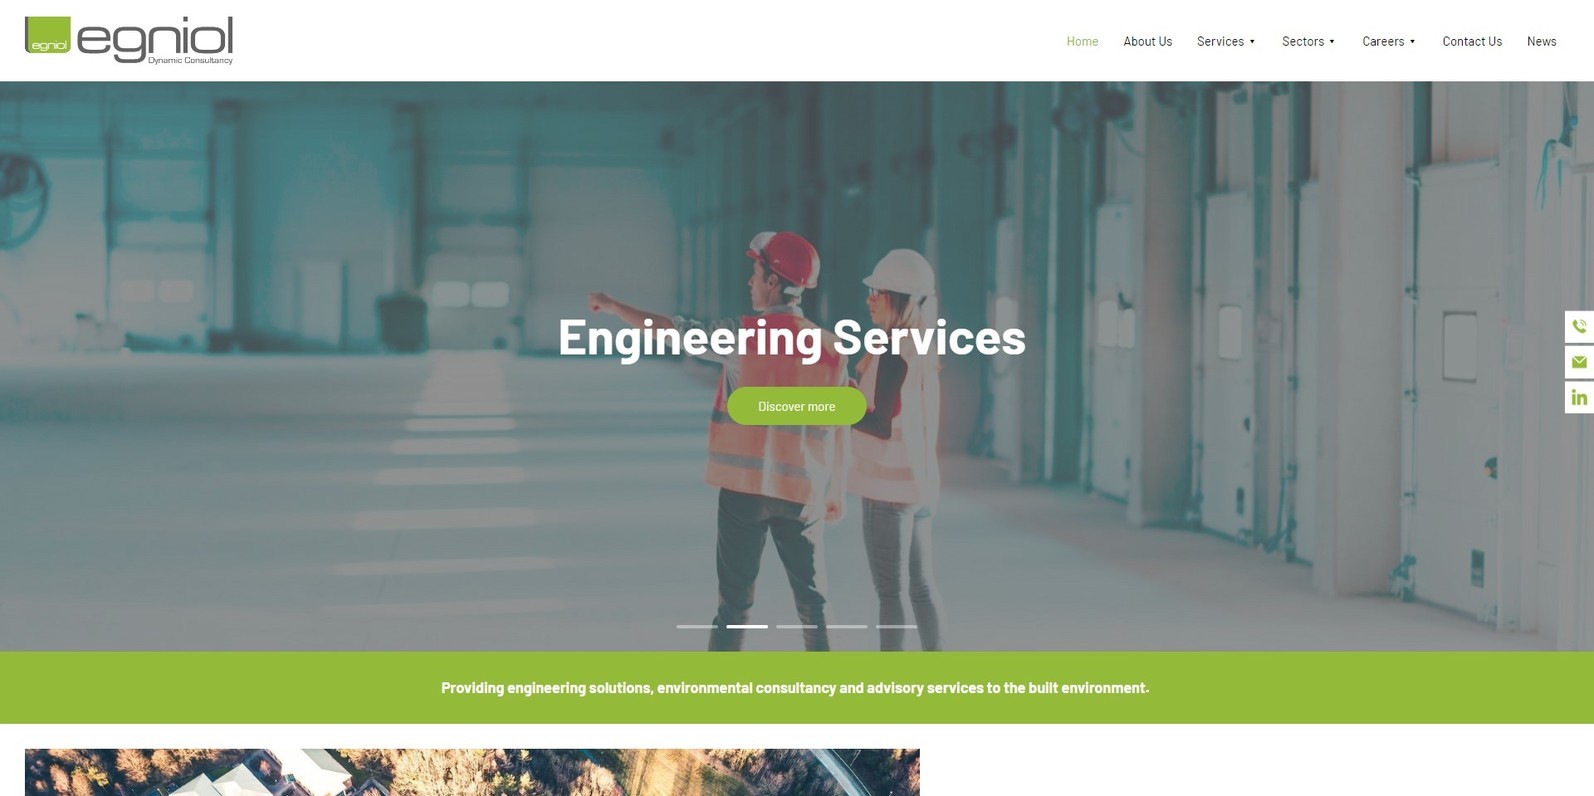 The new Egniol, designed by it'seeze, website shown on desktop